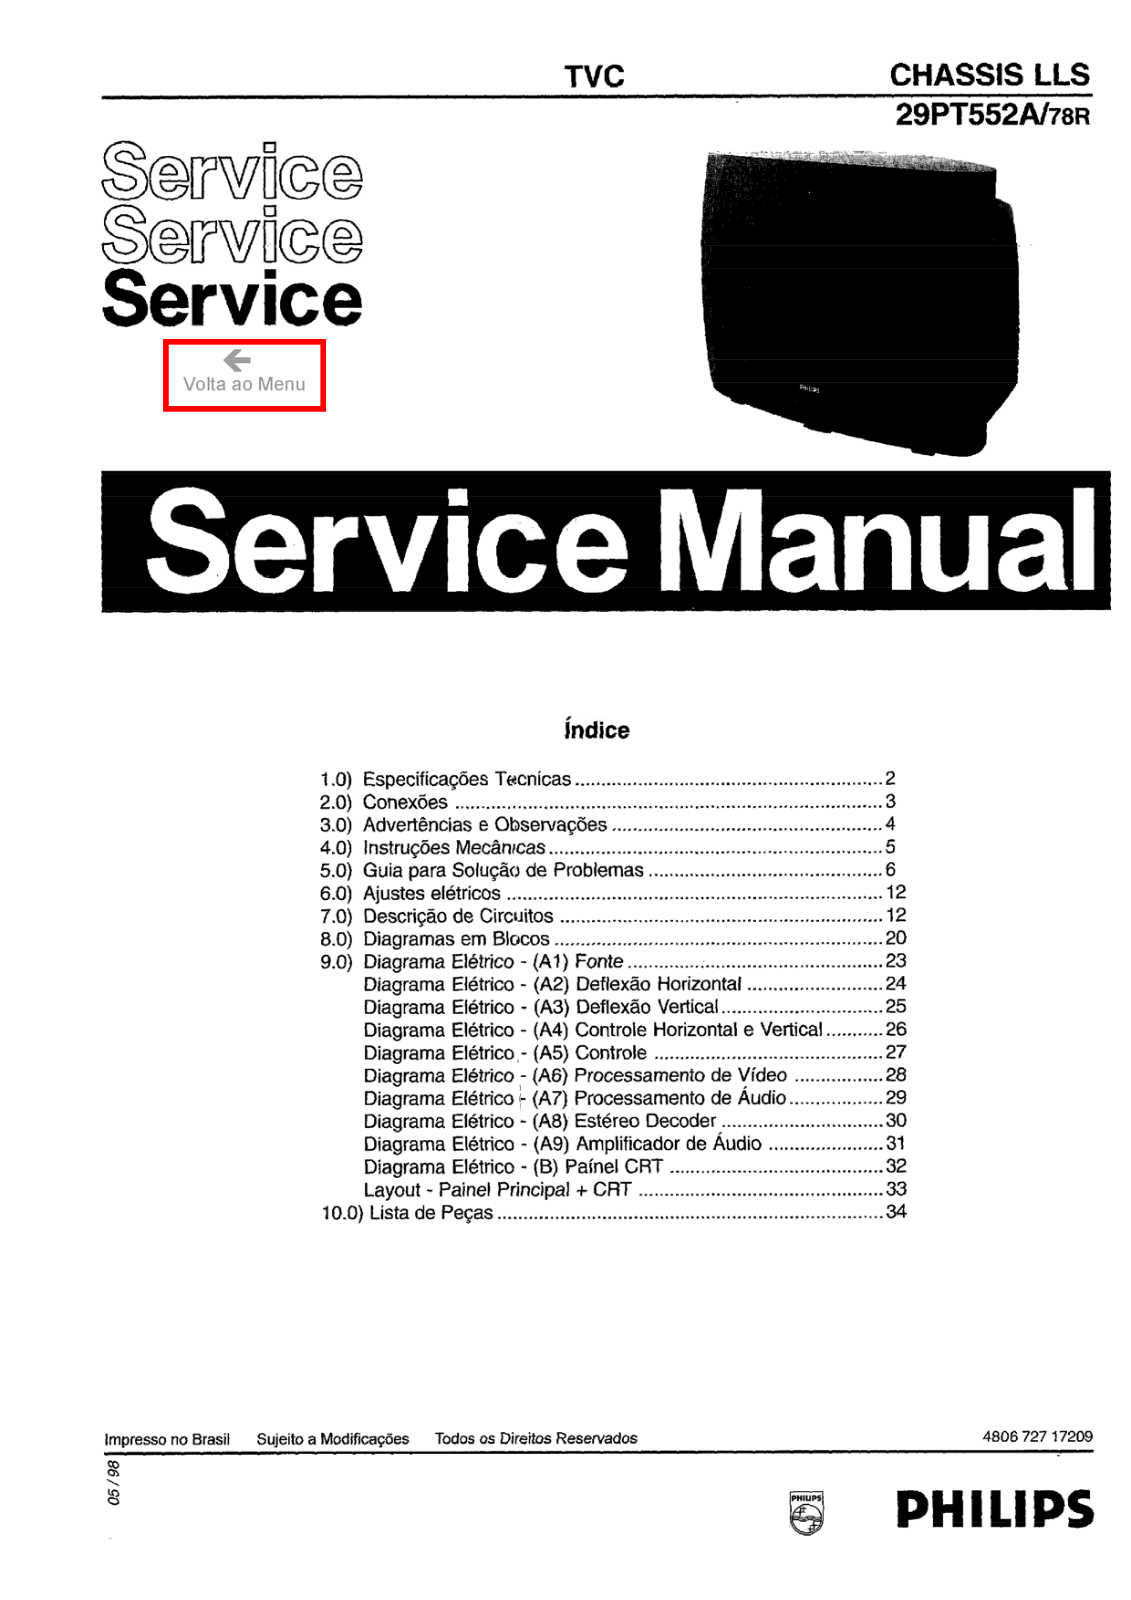 PHILIPS 29PT552A, 29PT578R Service Manual